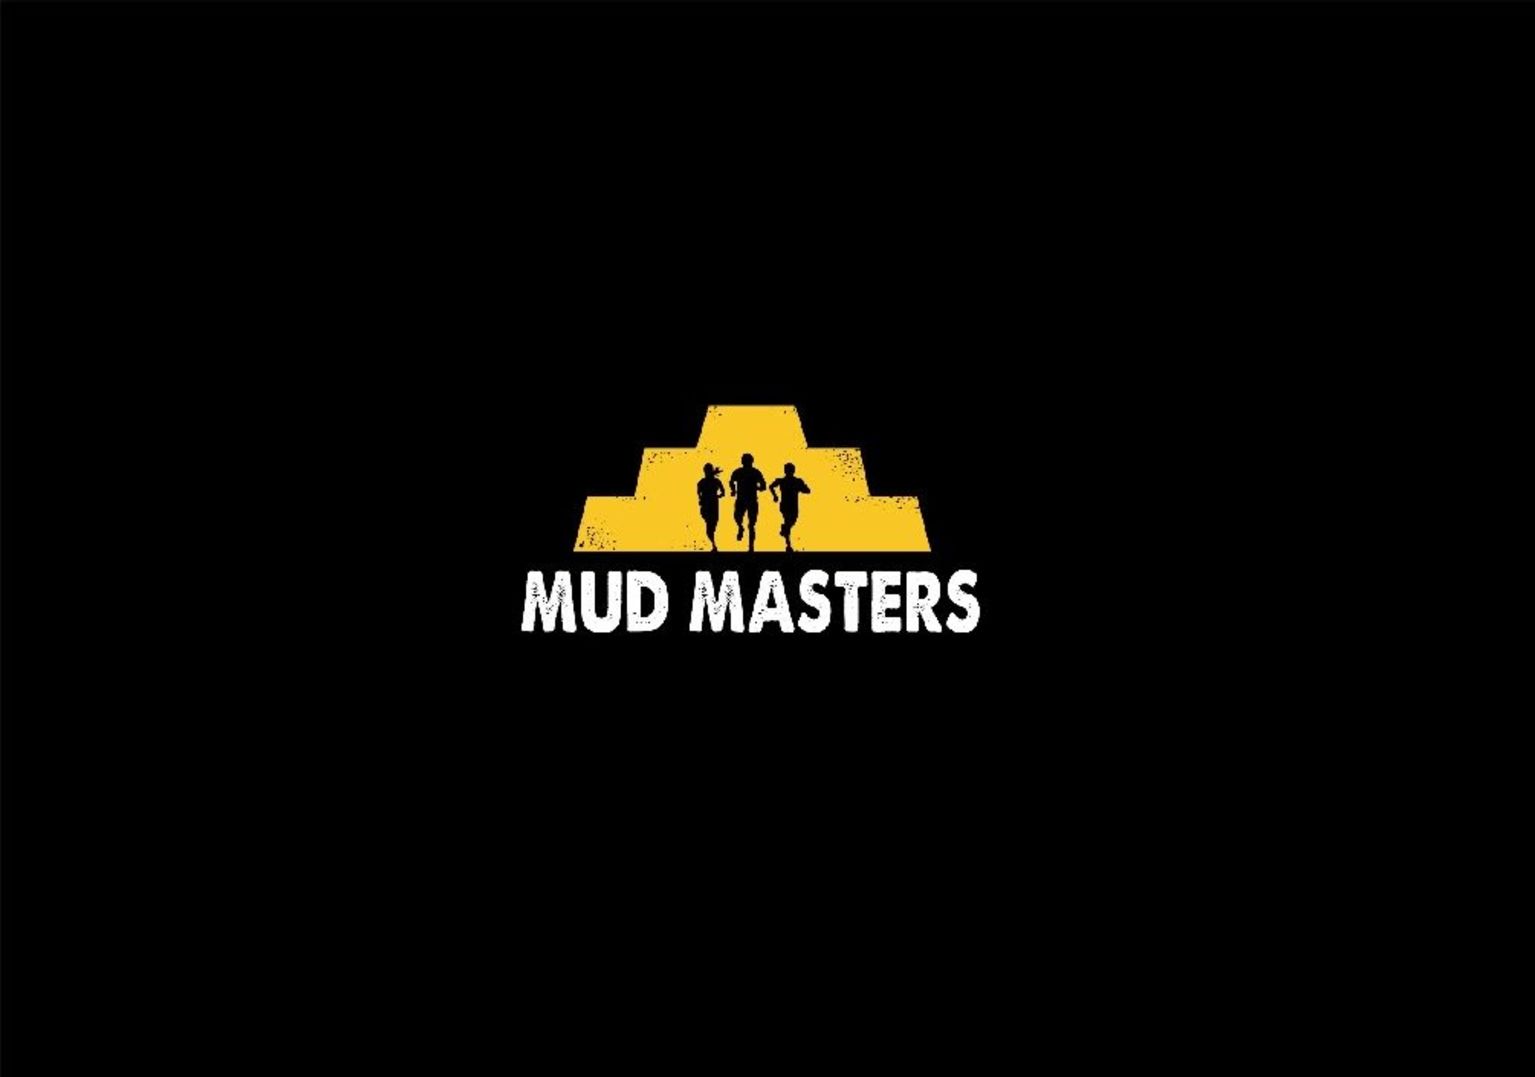 Mud Masters logo